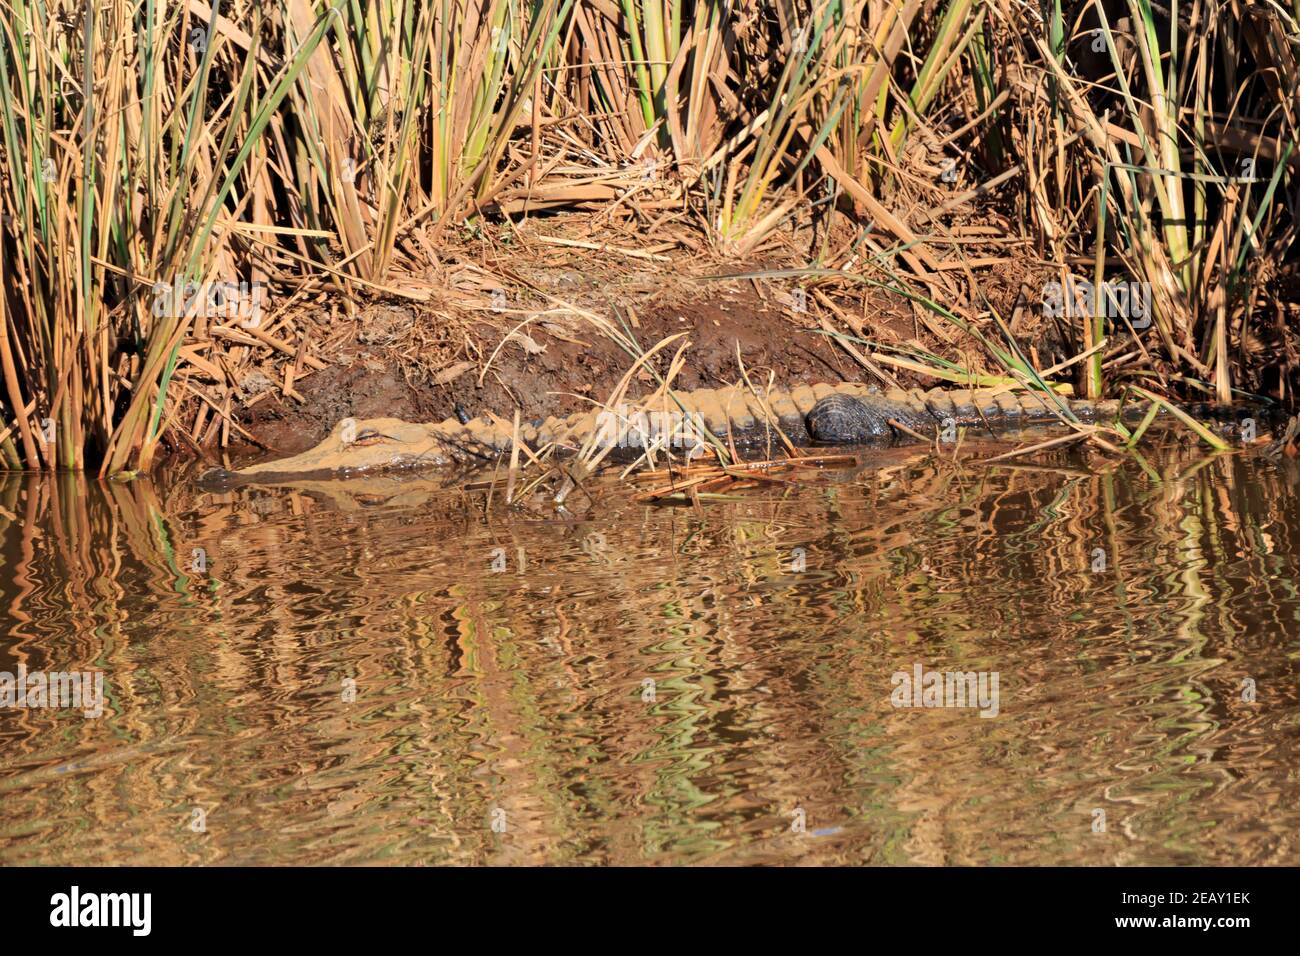 Juvenile American alligator (Alligator mississipiensis) half submerged in a muddy bank Stock Photo